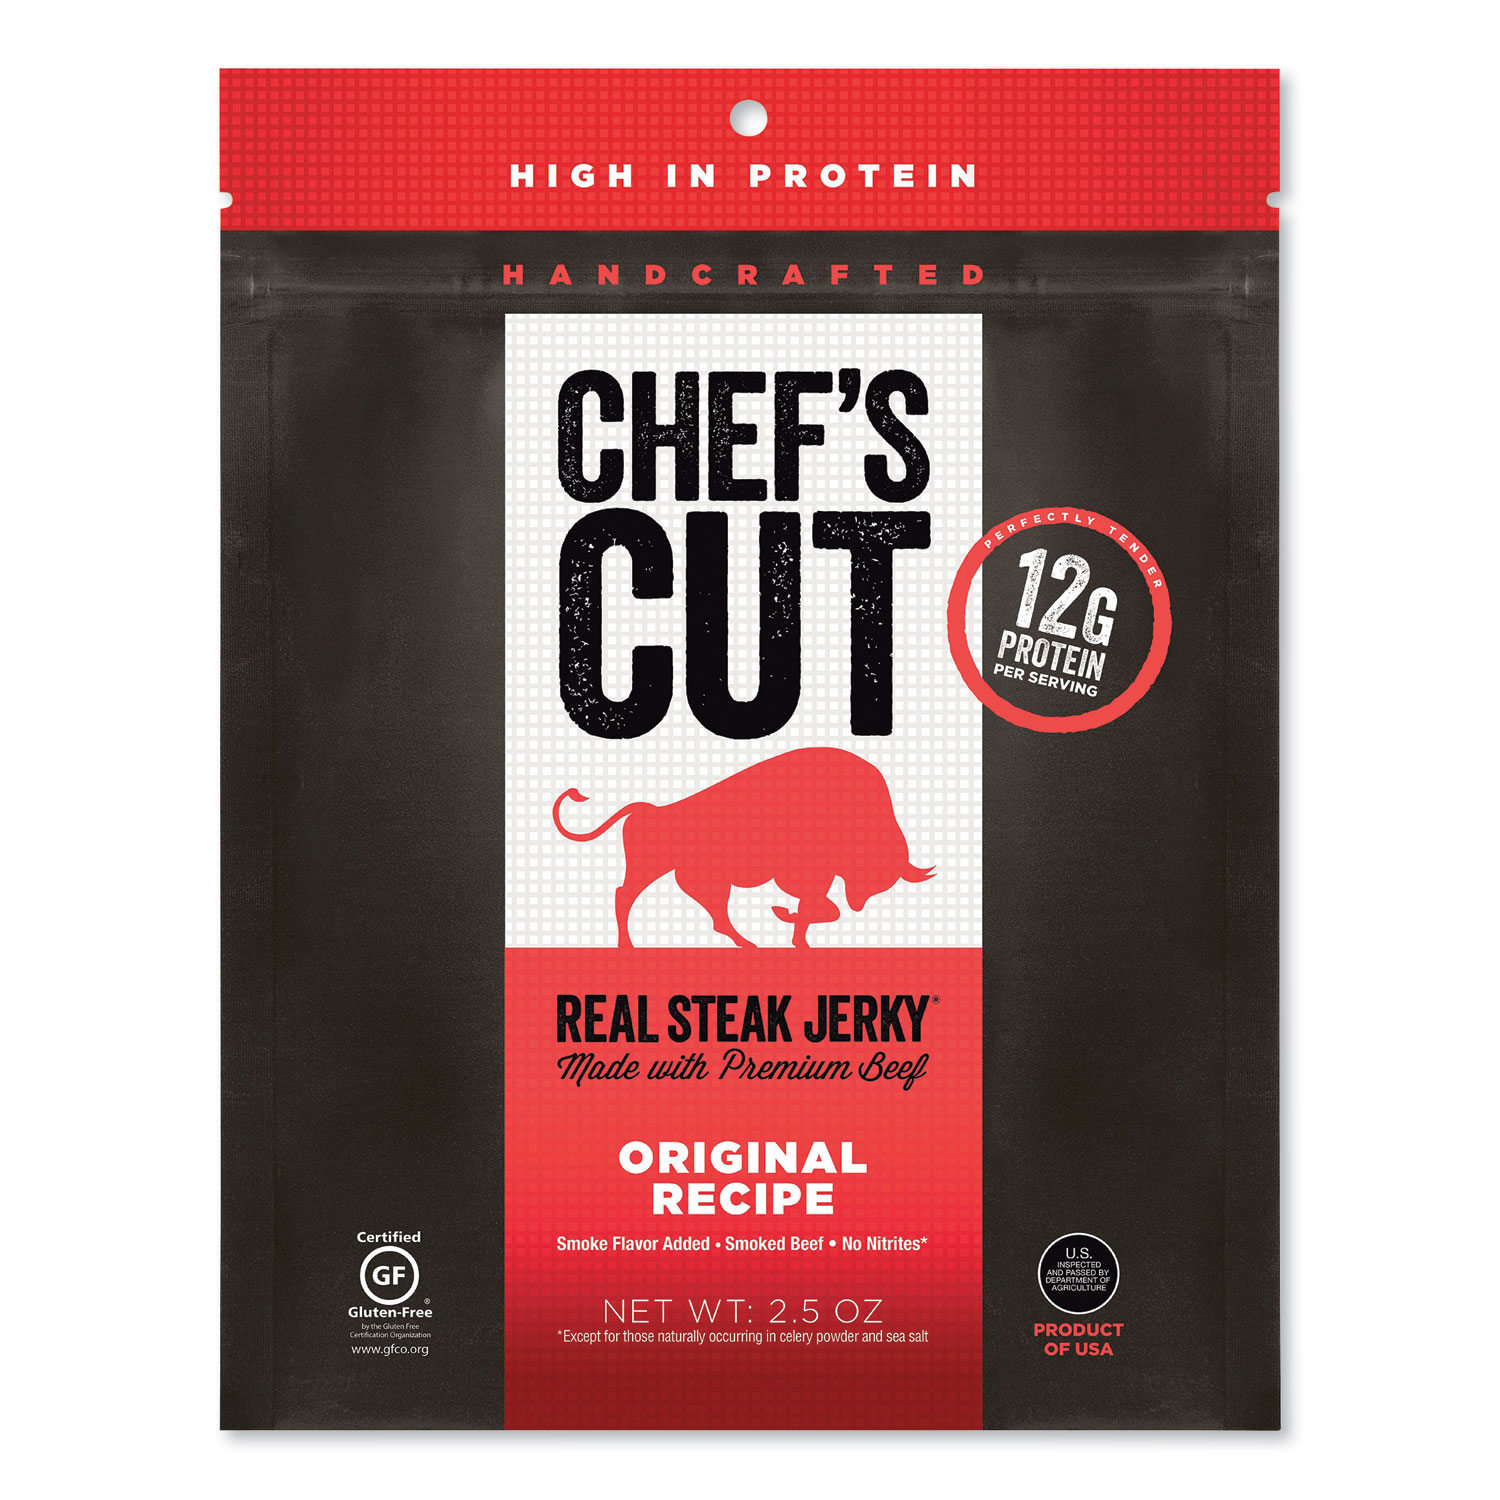  Chef's Cut CCR00500 Real Steak Jerky, Original Recipe, 2.5 oz Bag (CHU2614070) 